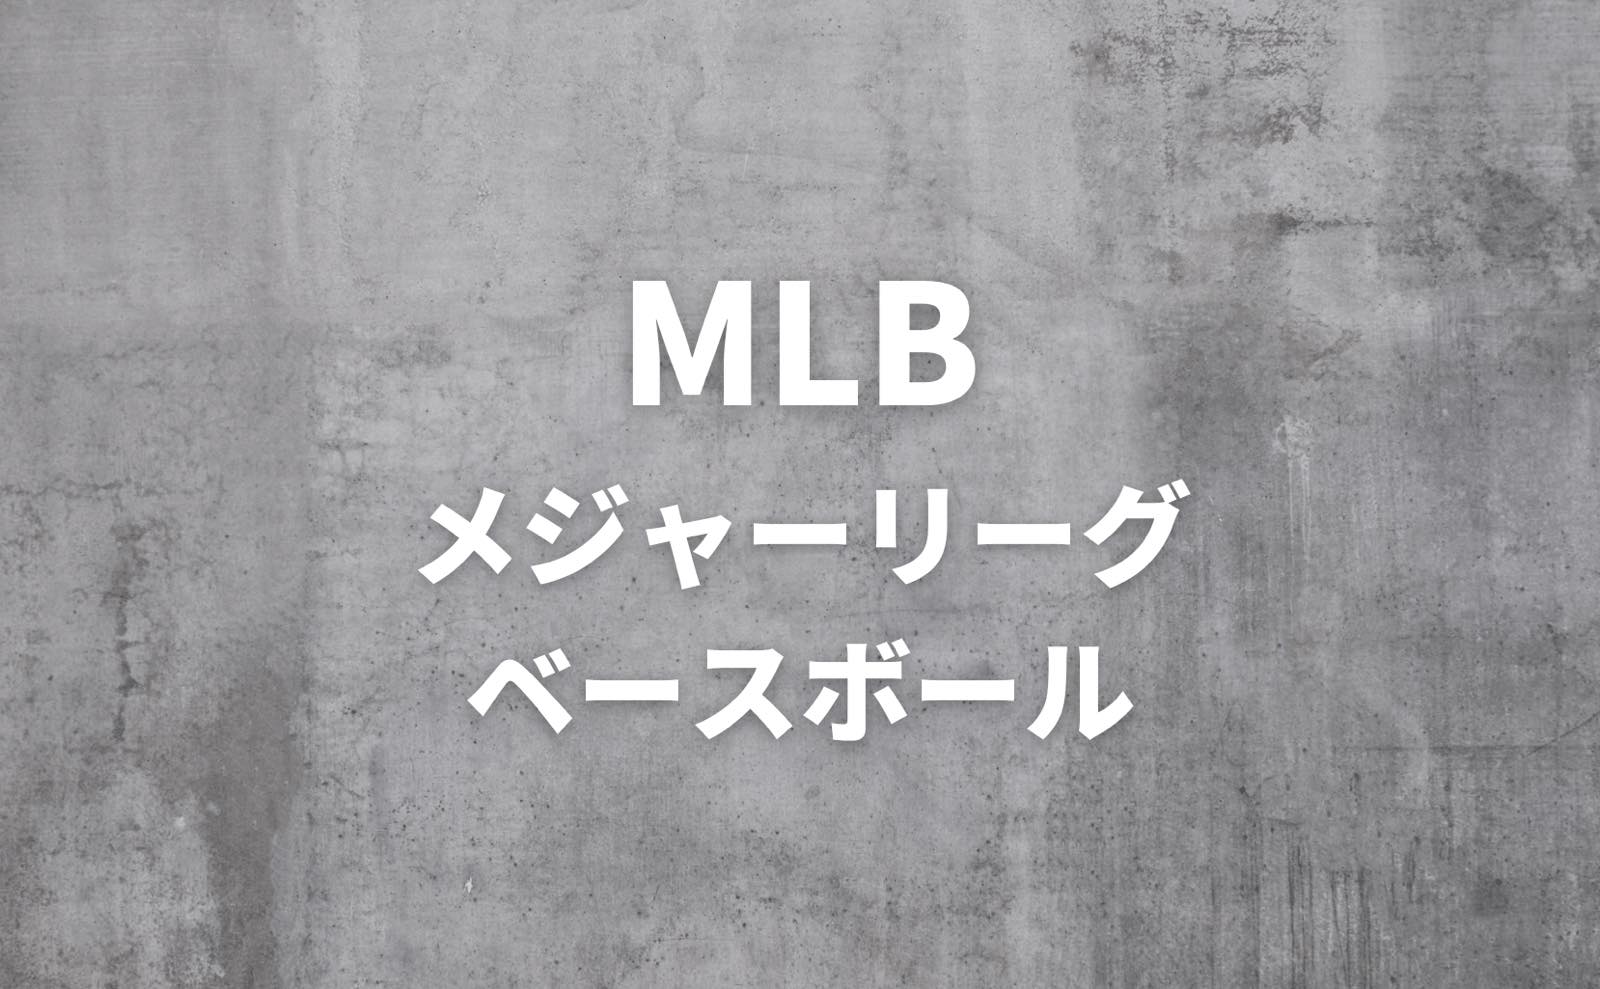 MLB Major League Baseball メジャーリーグベースボール